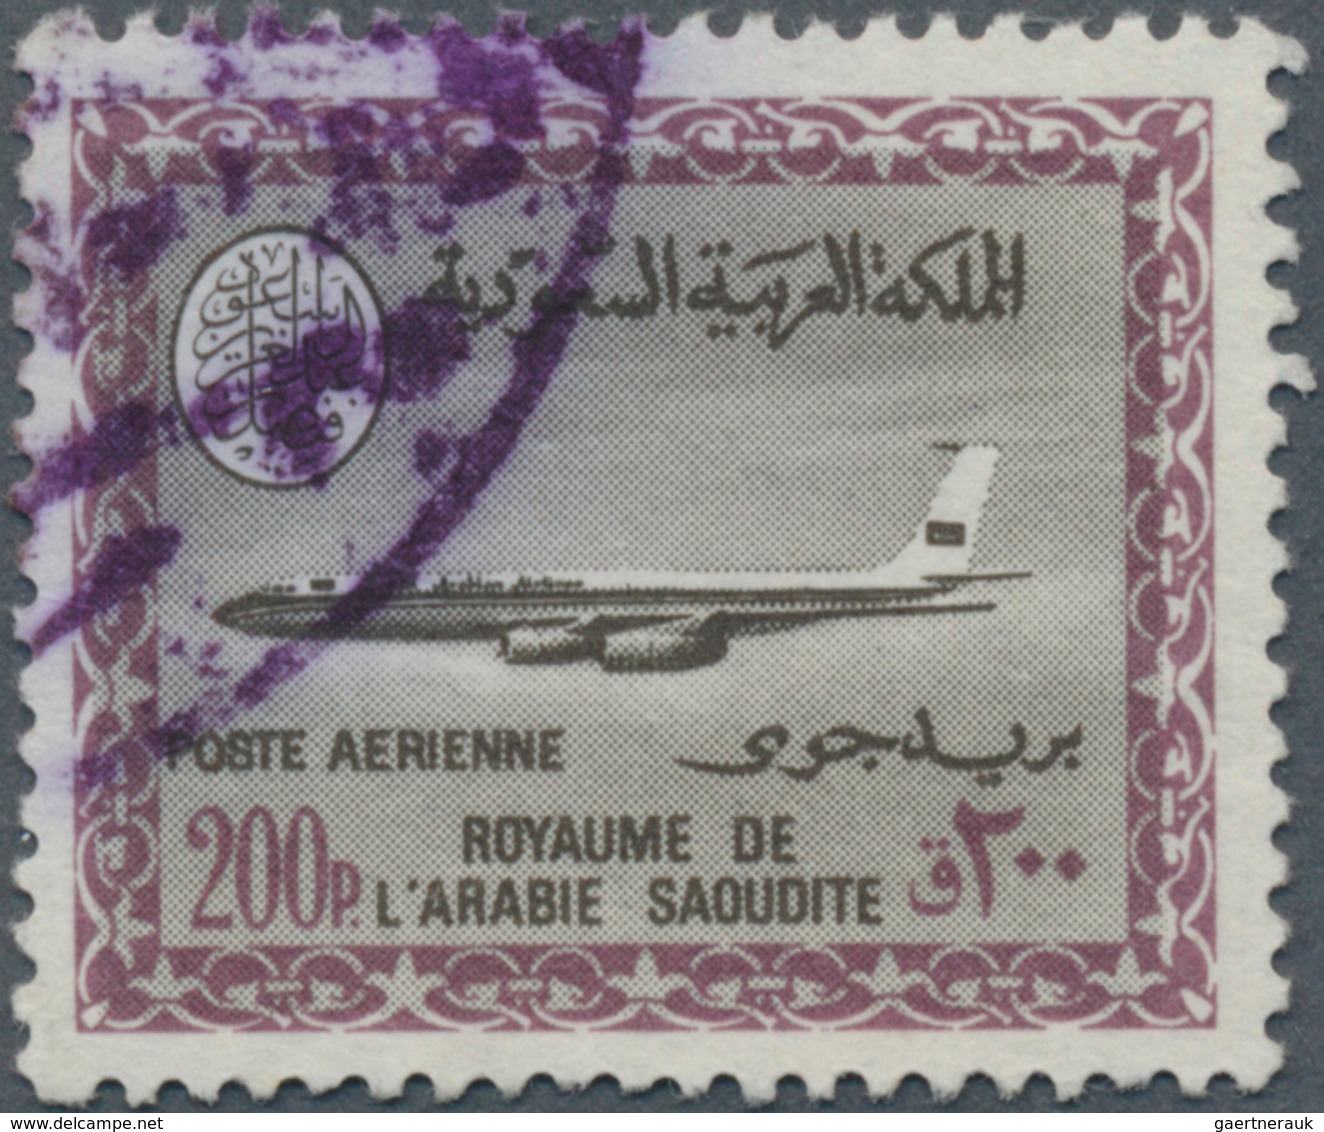 Saudi-Arabien: 1975, Boeing B720 Airmail With Cartouche Of King Faisal, Unwmkd. 200 Pia., Used, Rari - Arabie Saoudite